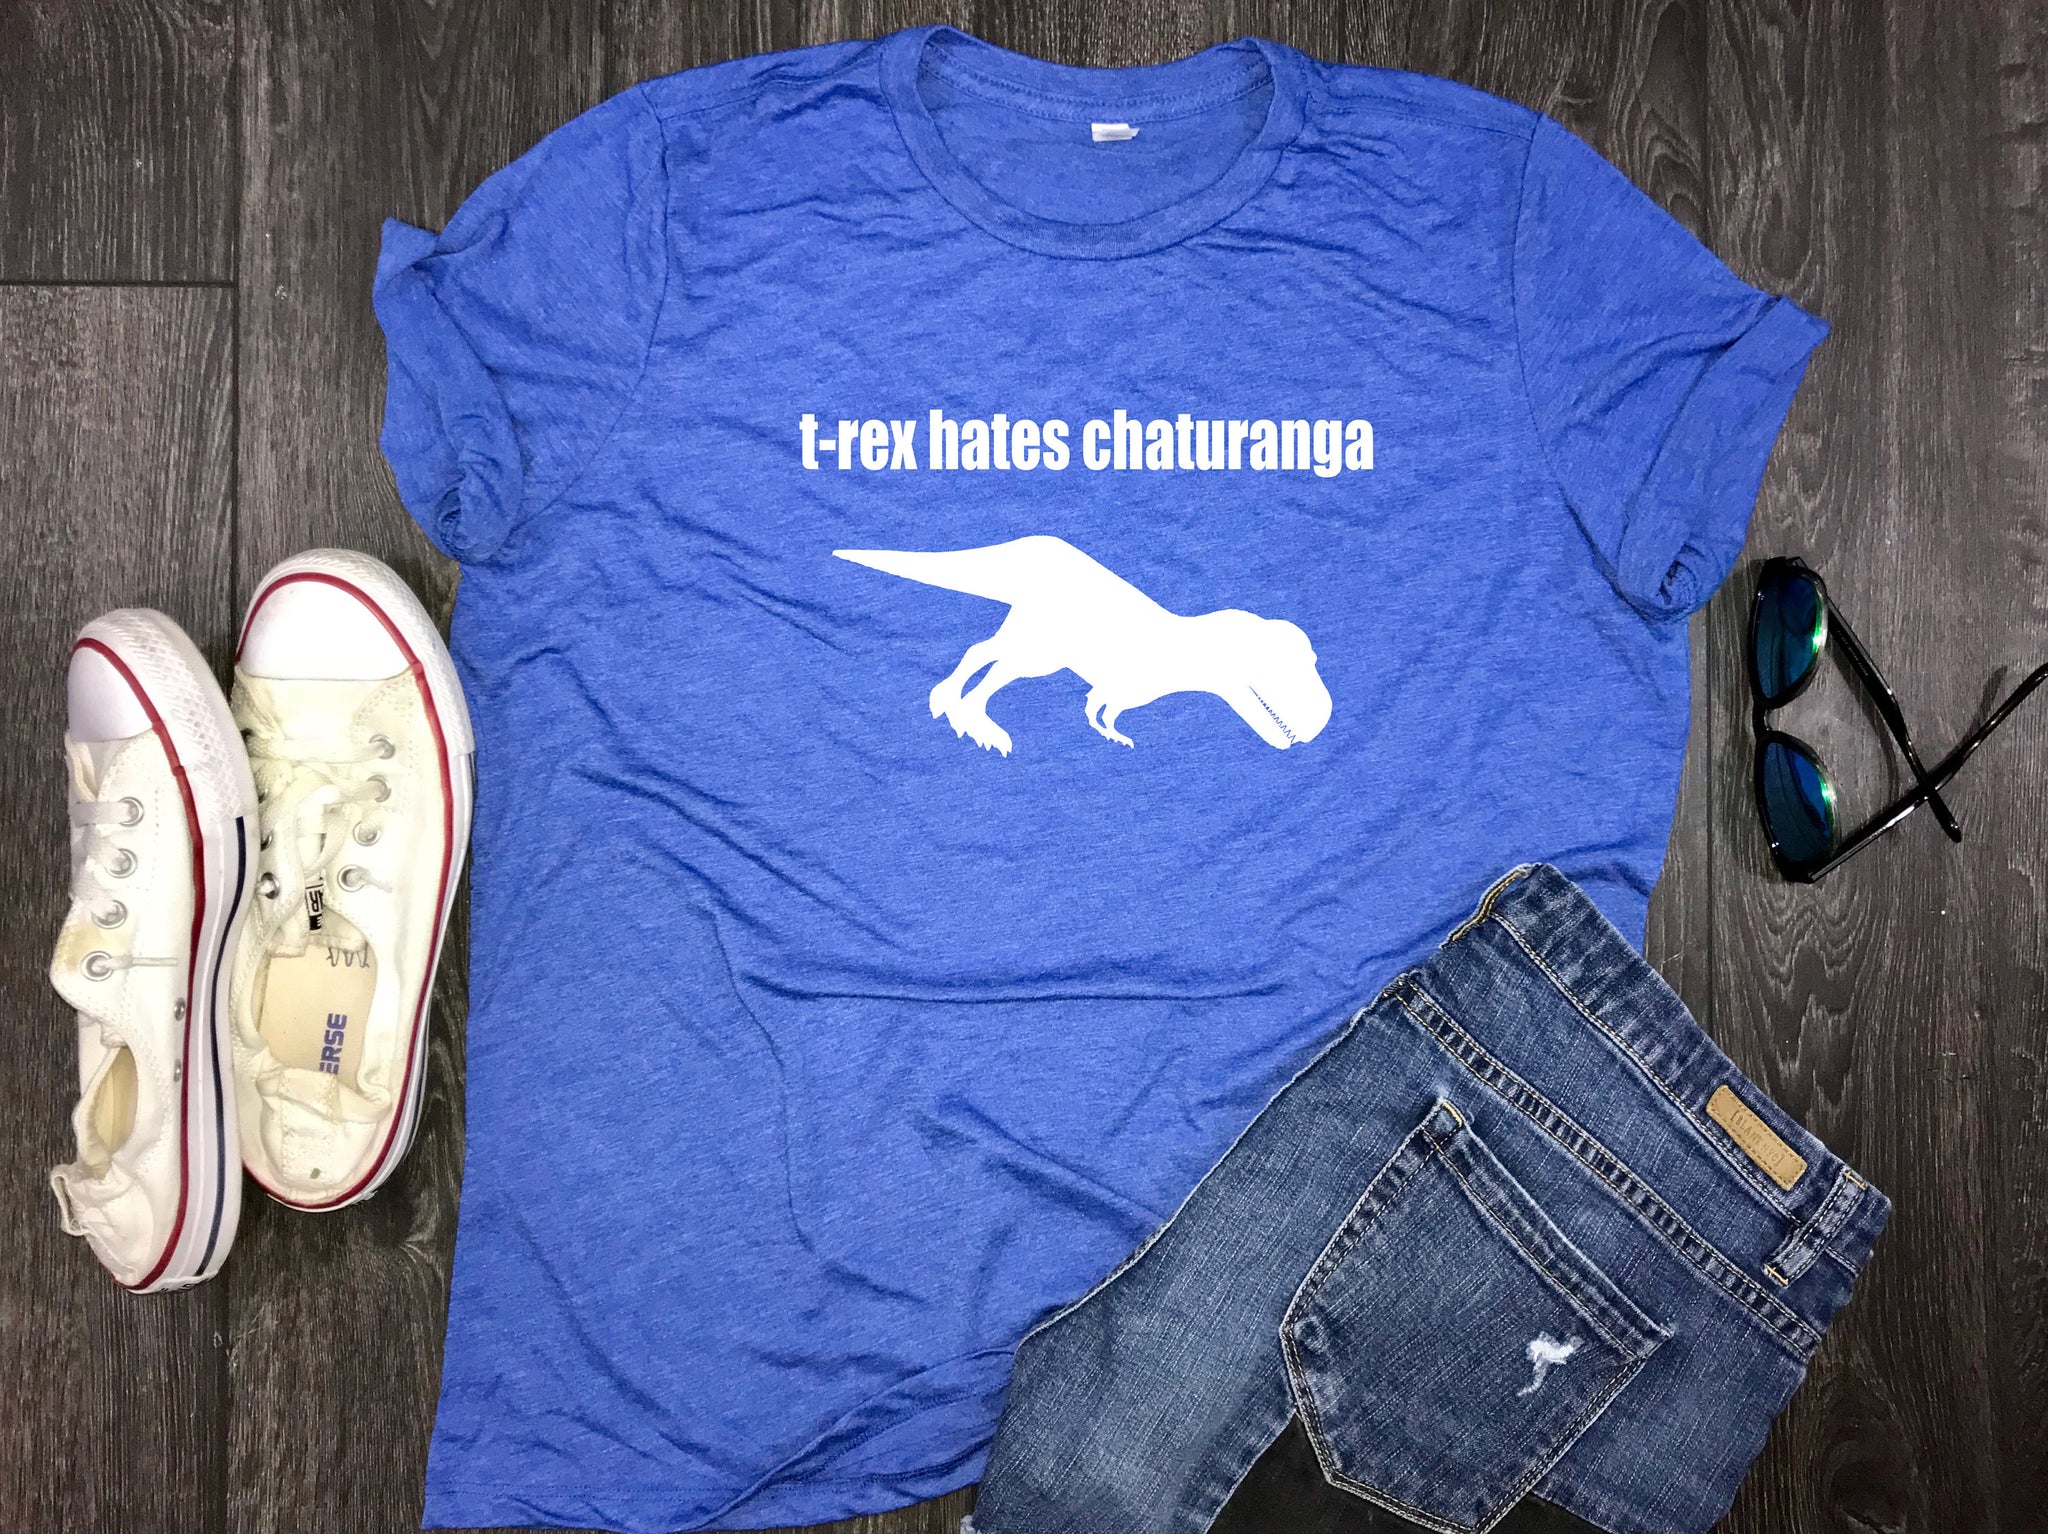 trex hates chaturanga yoga shirt, t-rex shirt, yoga shirt with funny s -  Living Limitless Clothing Co.